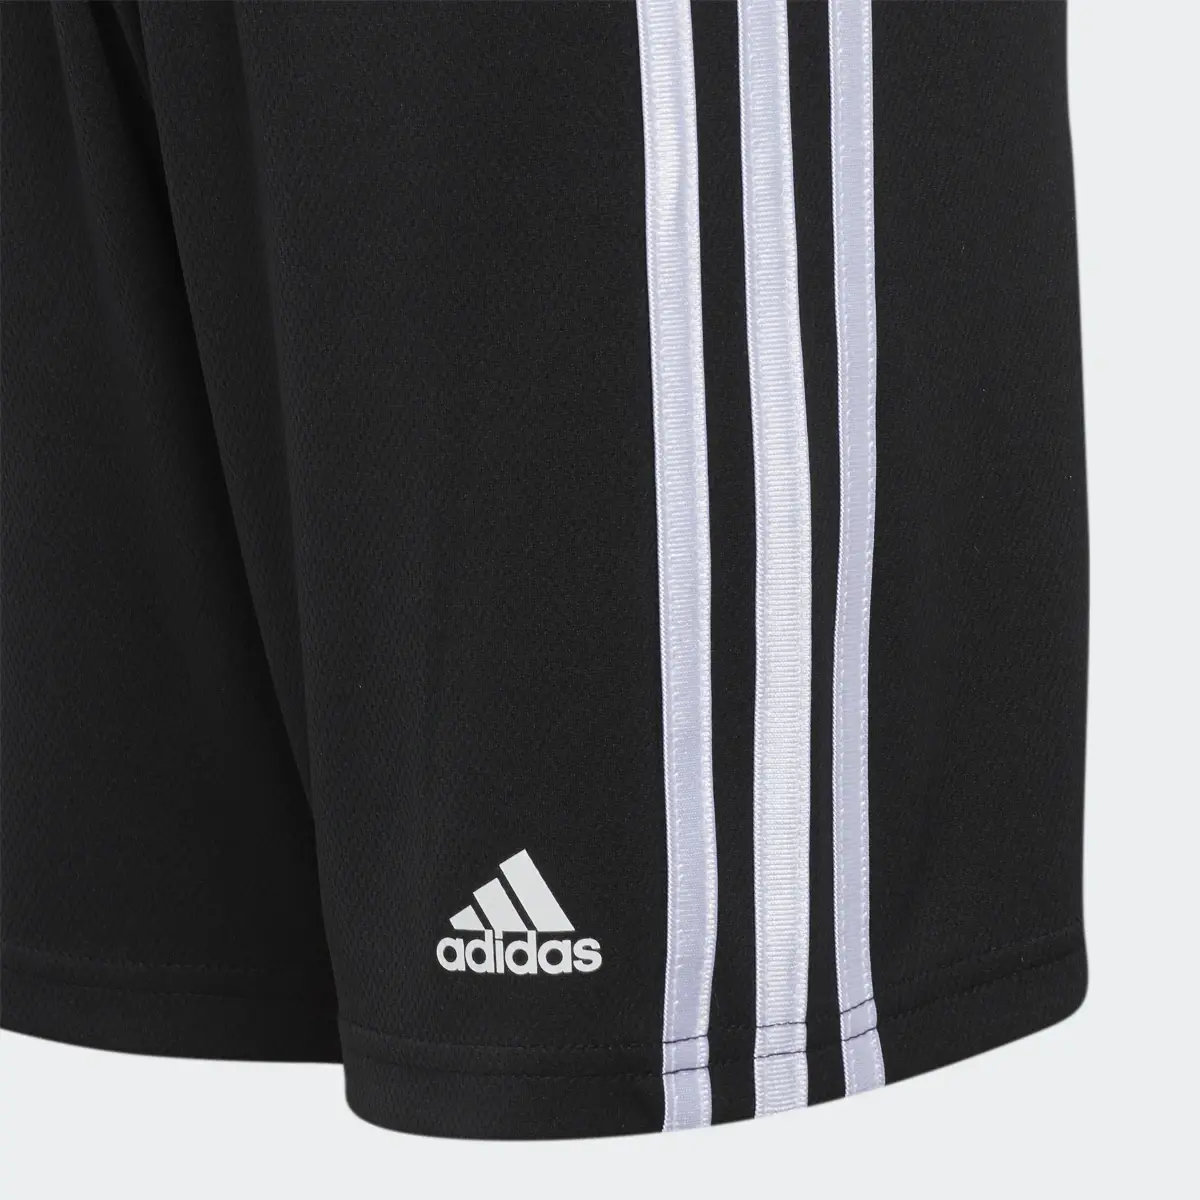 Adidas Classic 3-Stripes Shorts. 3